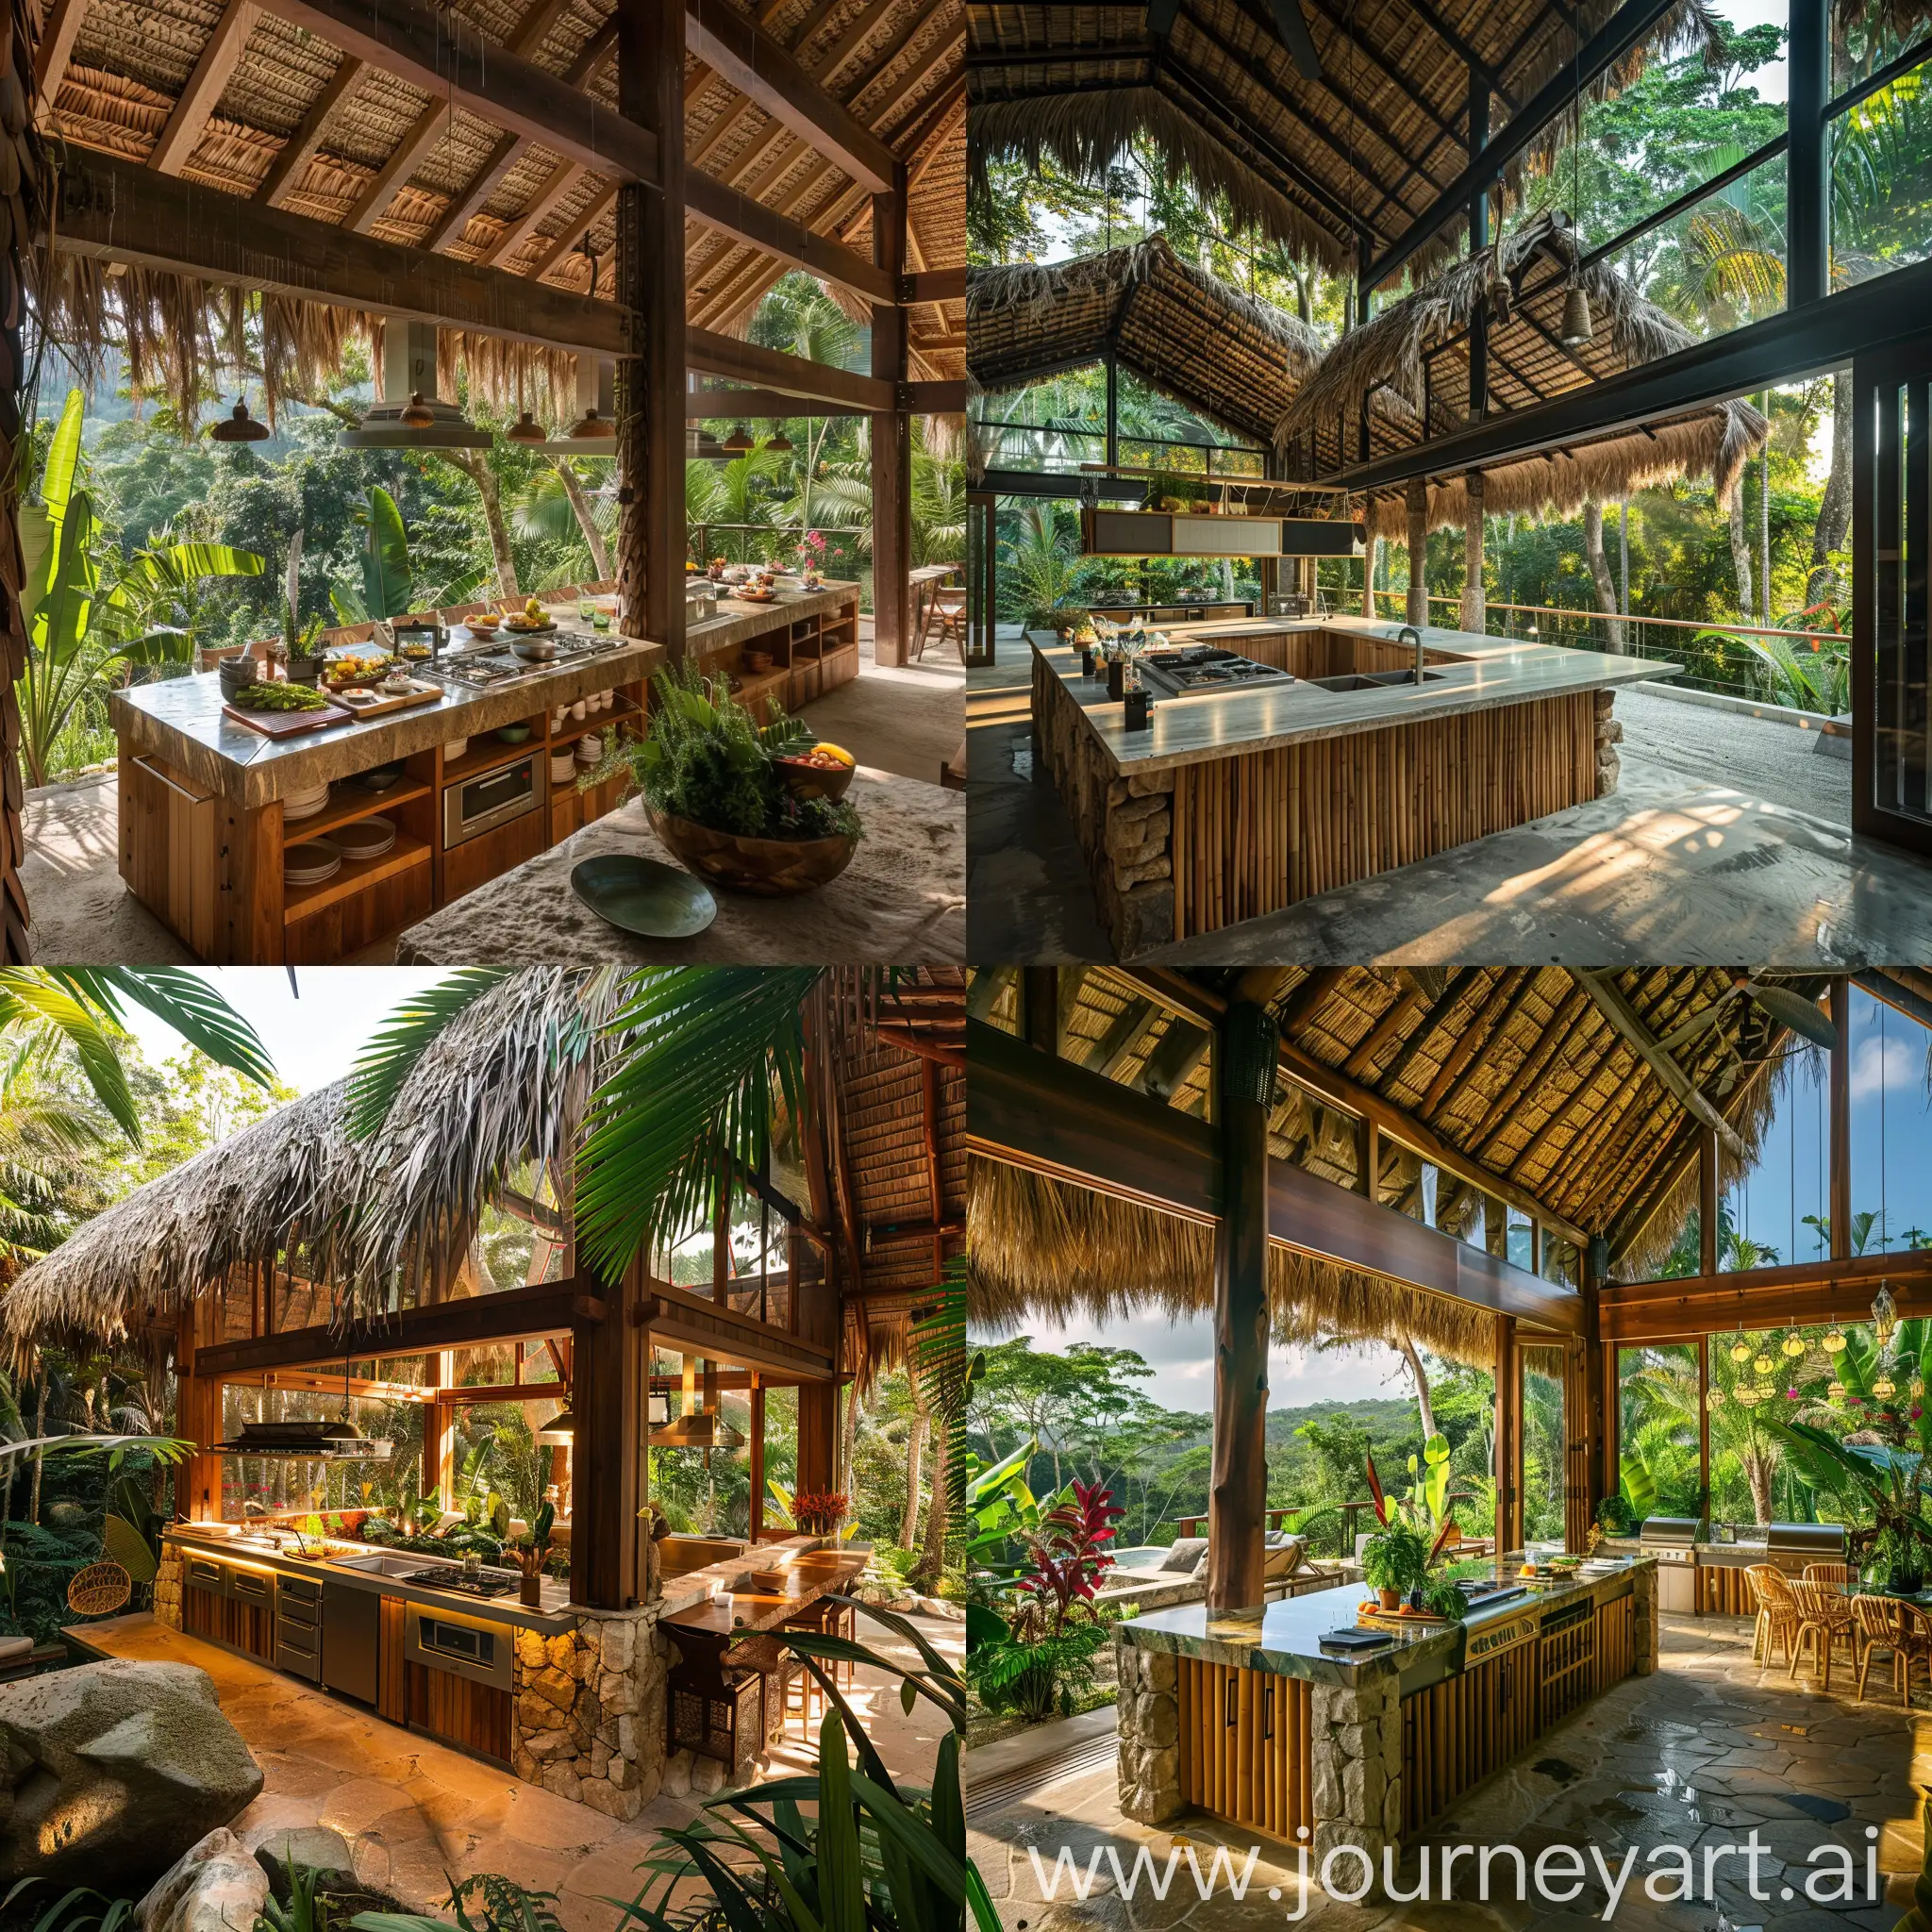 Gourmet-Rainforest-Kitchen-Cooking-Amidst-Natures-Splendor